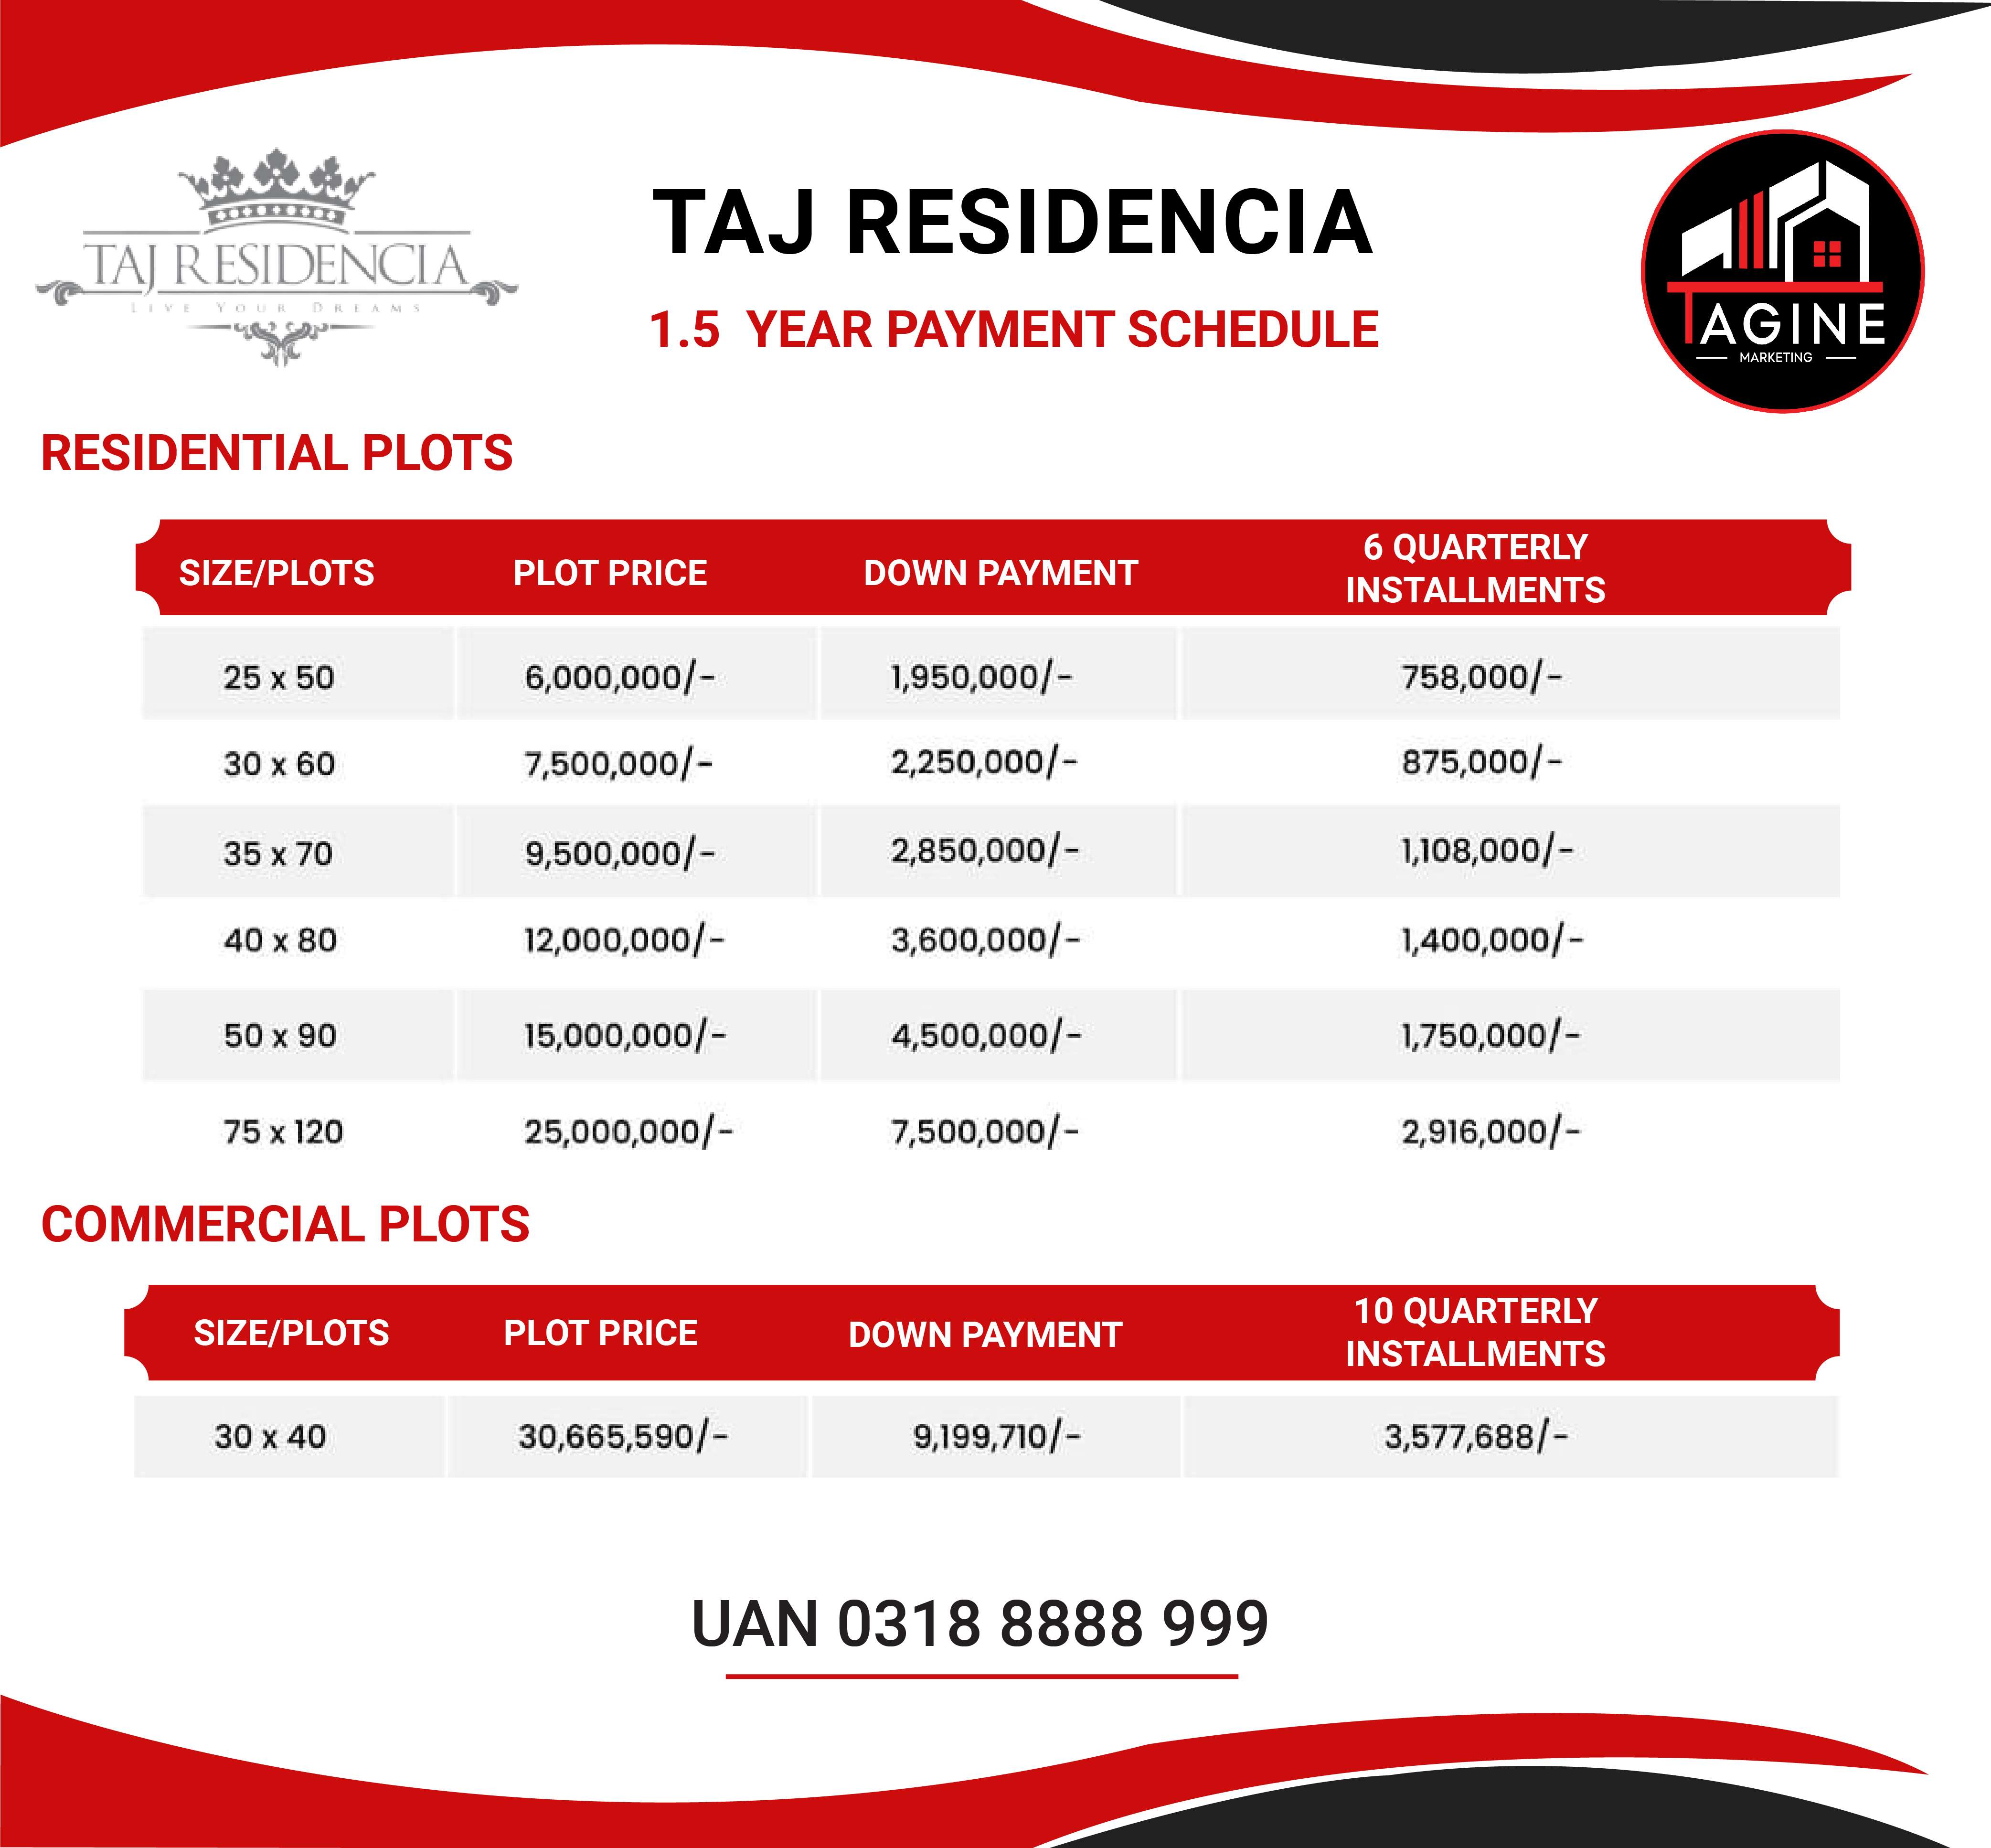 TAJ-RESIDENCIA-PAYMENT-PLAN-1.5-YEAR-01